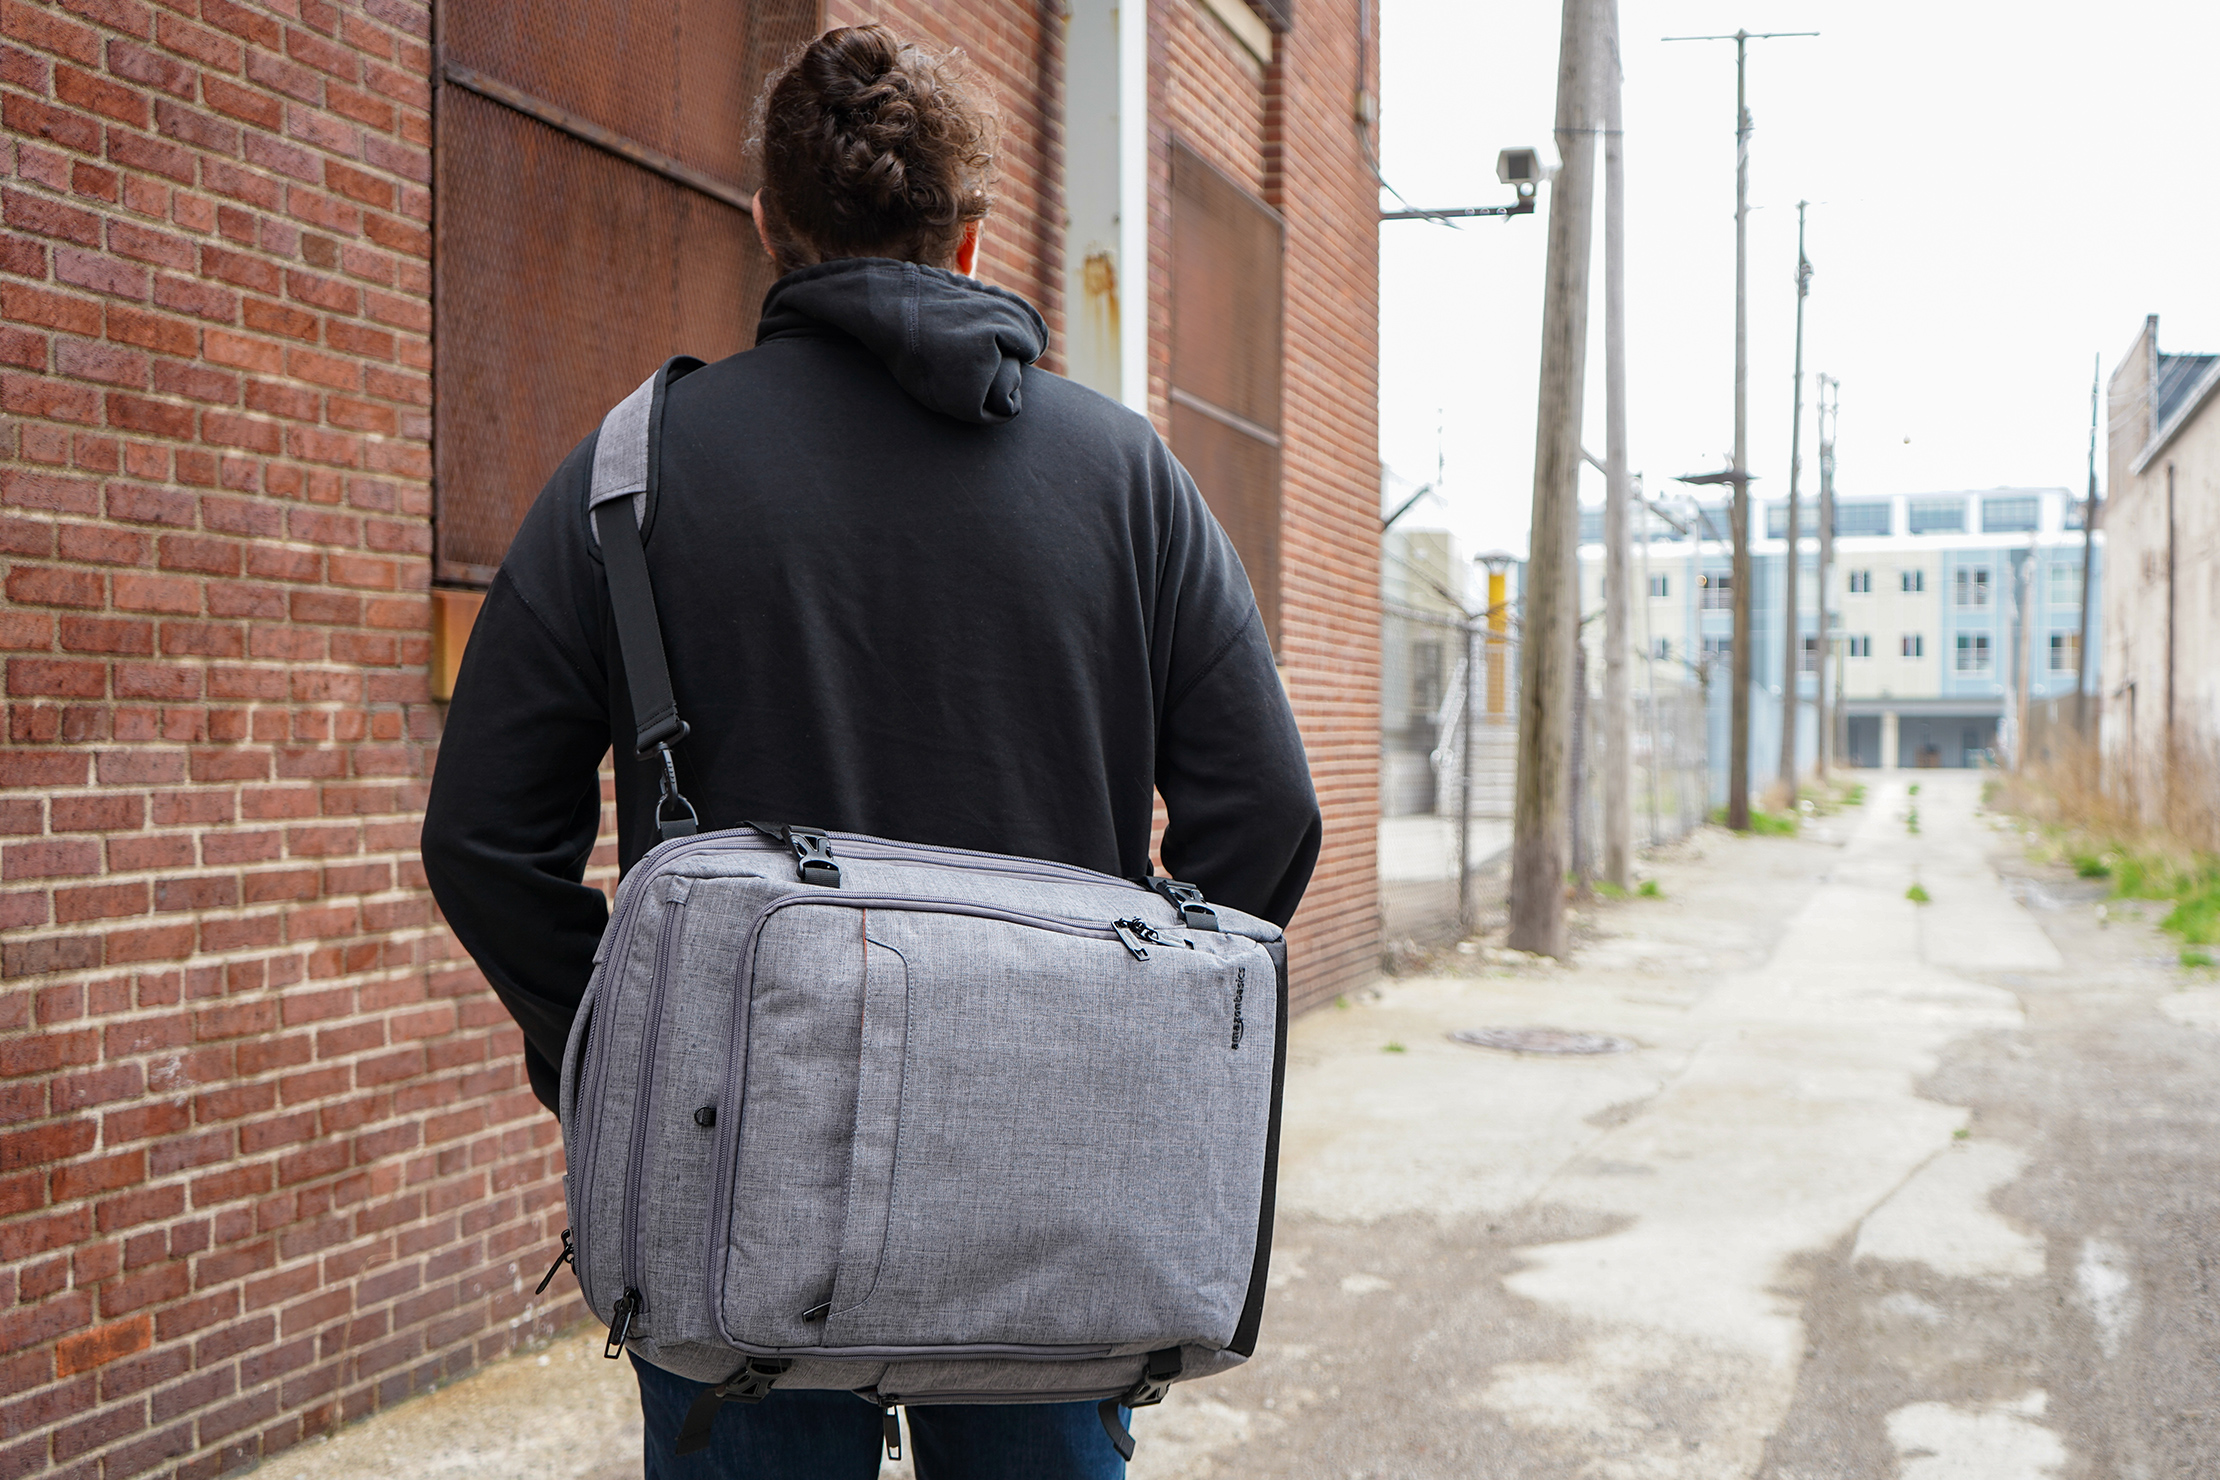 AmazonBasics Slim Travel Backpack Weekender Worn As A Messenger Bag